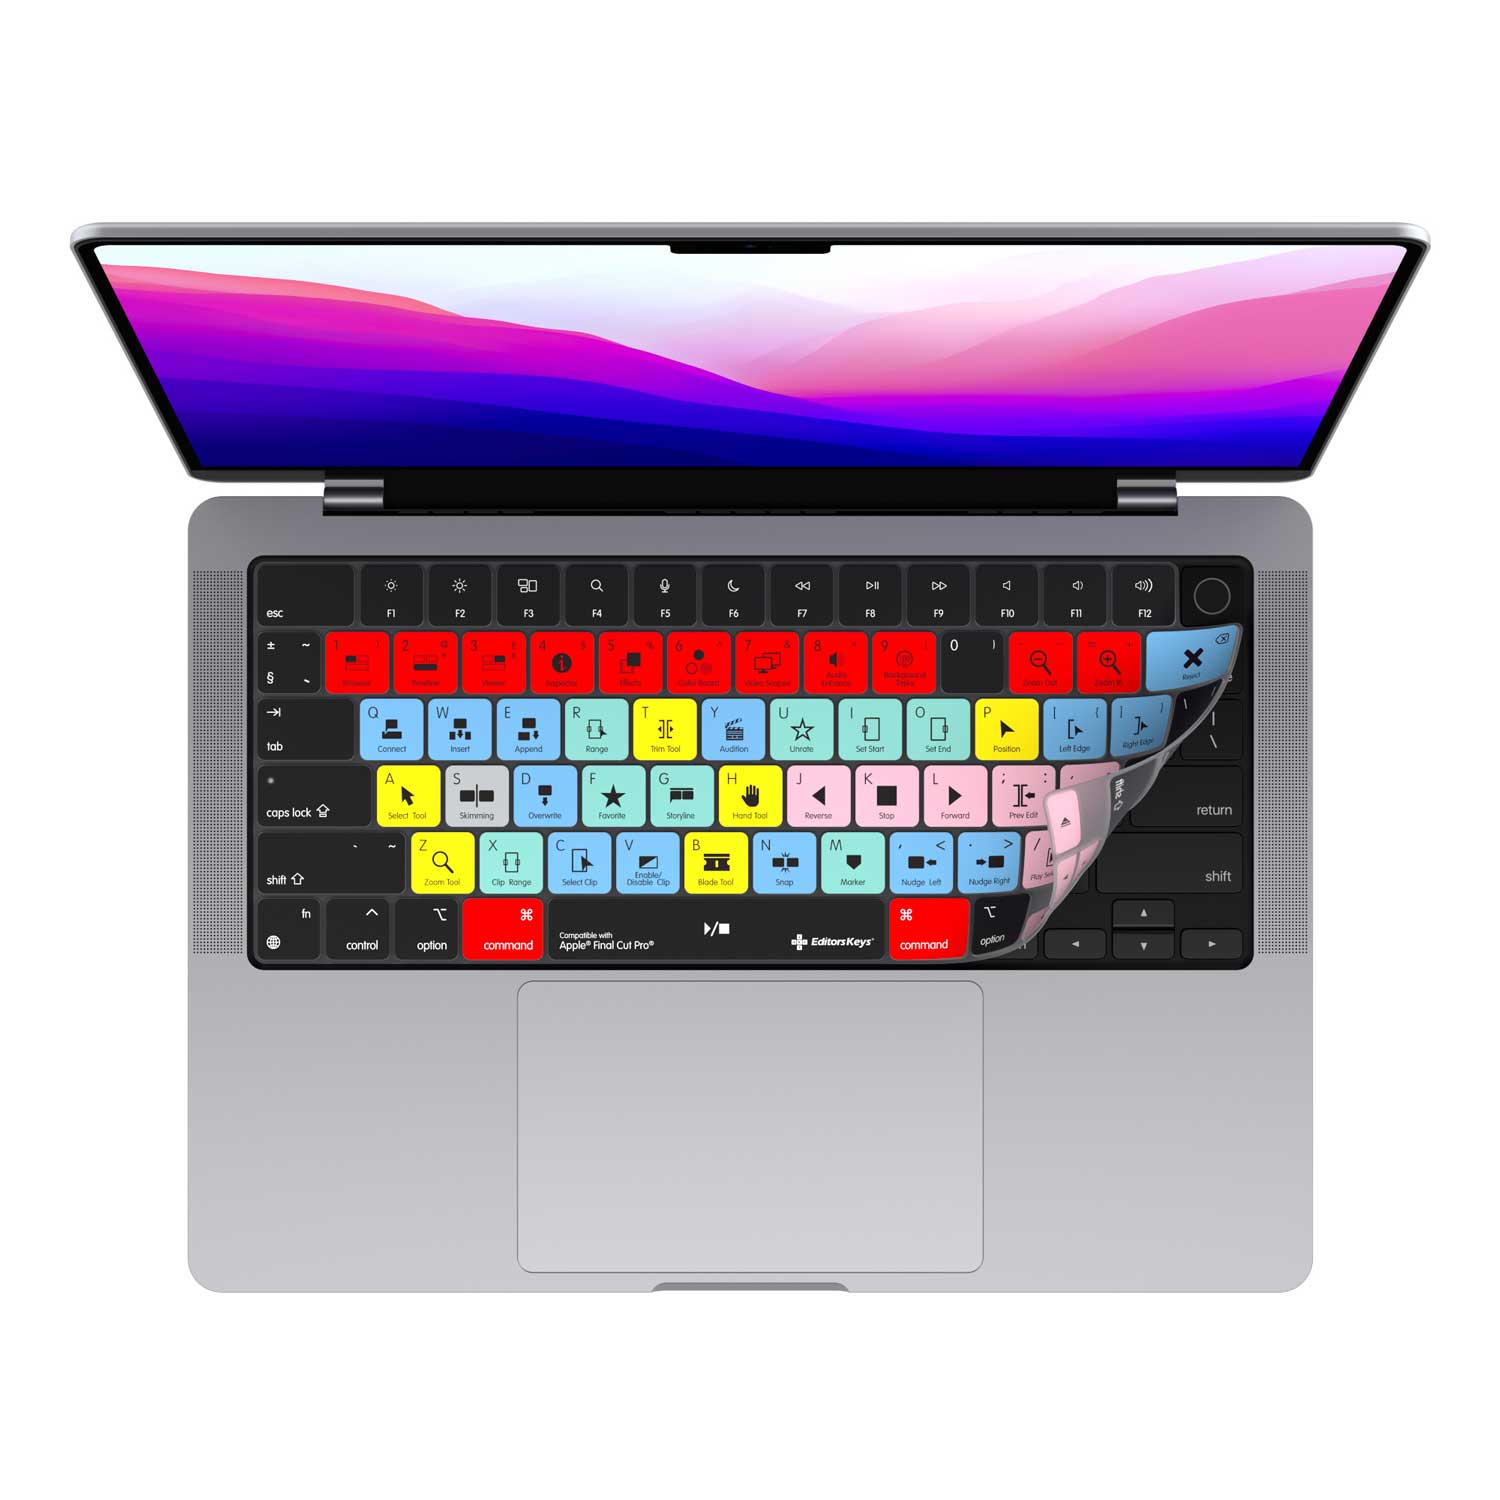 Final Cut Pro Keyboard Covers for MacBook and iMac - Editors Keys